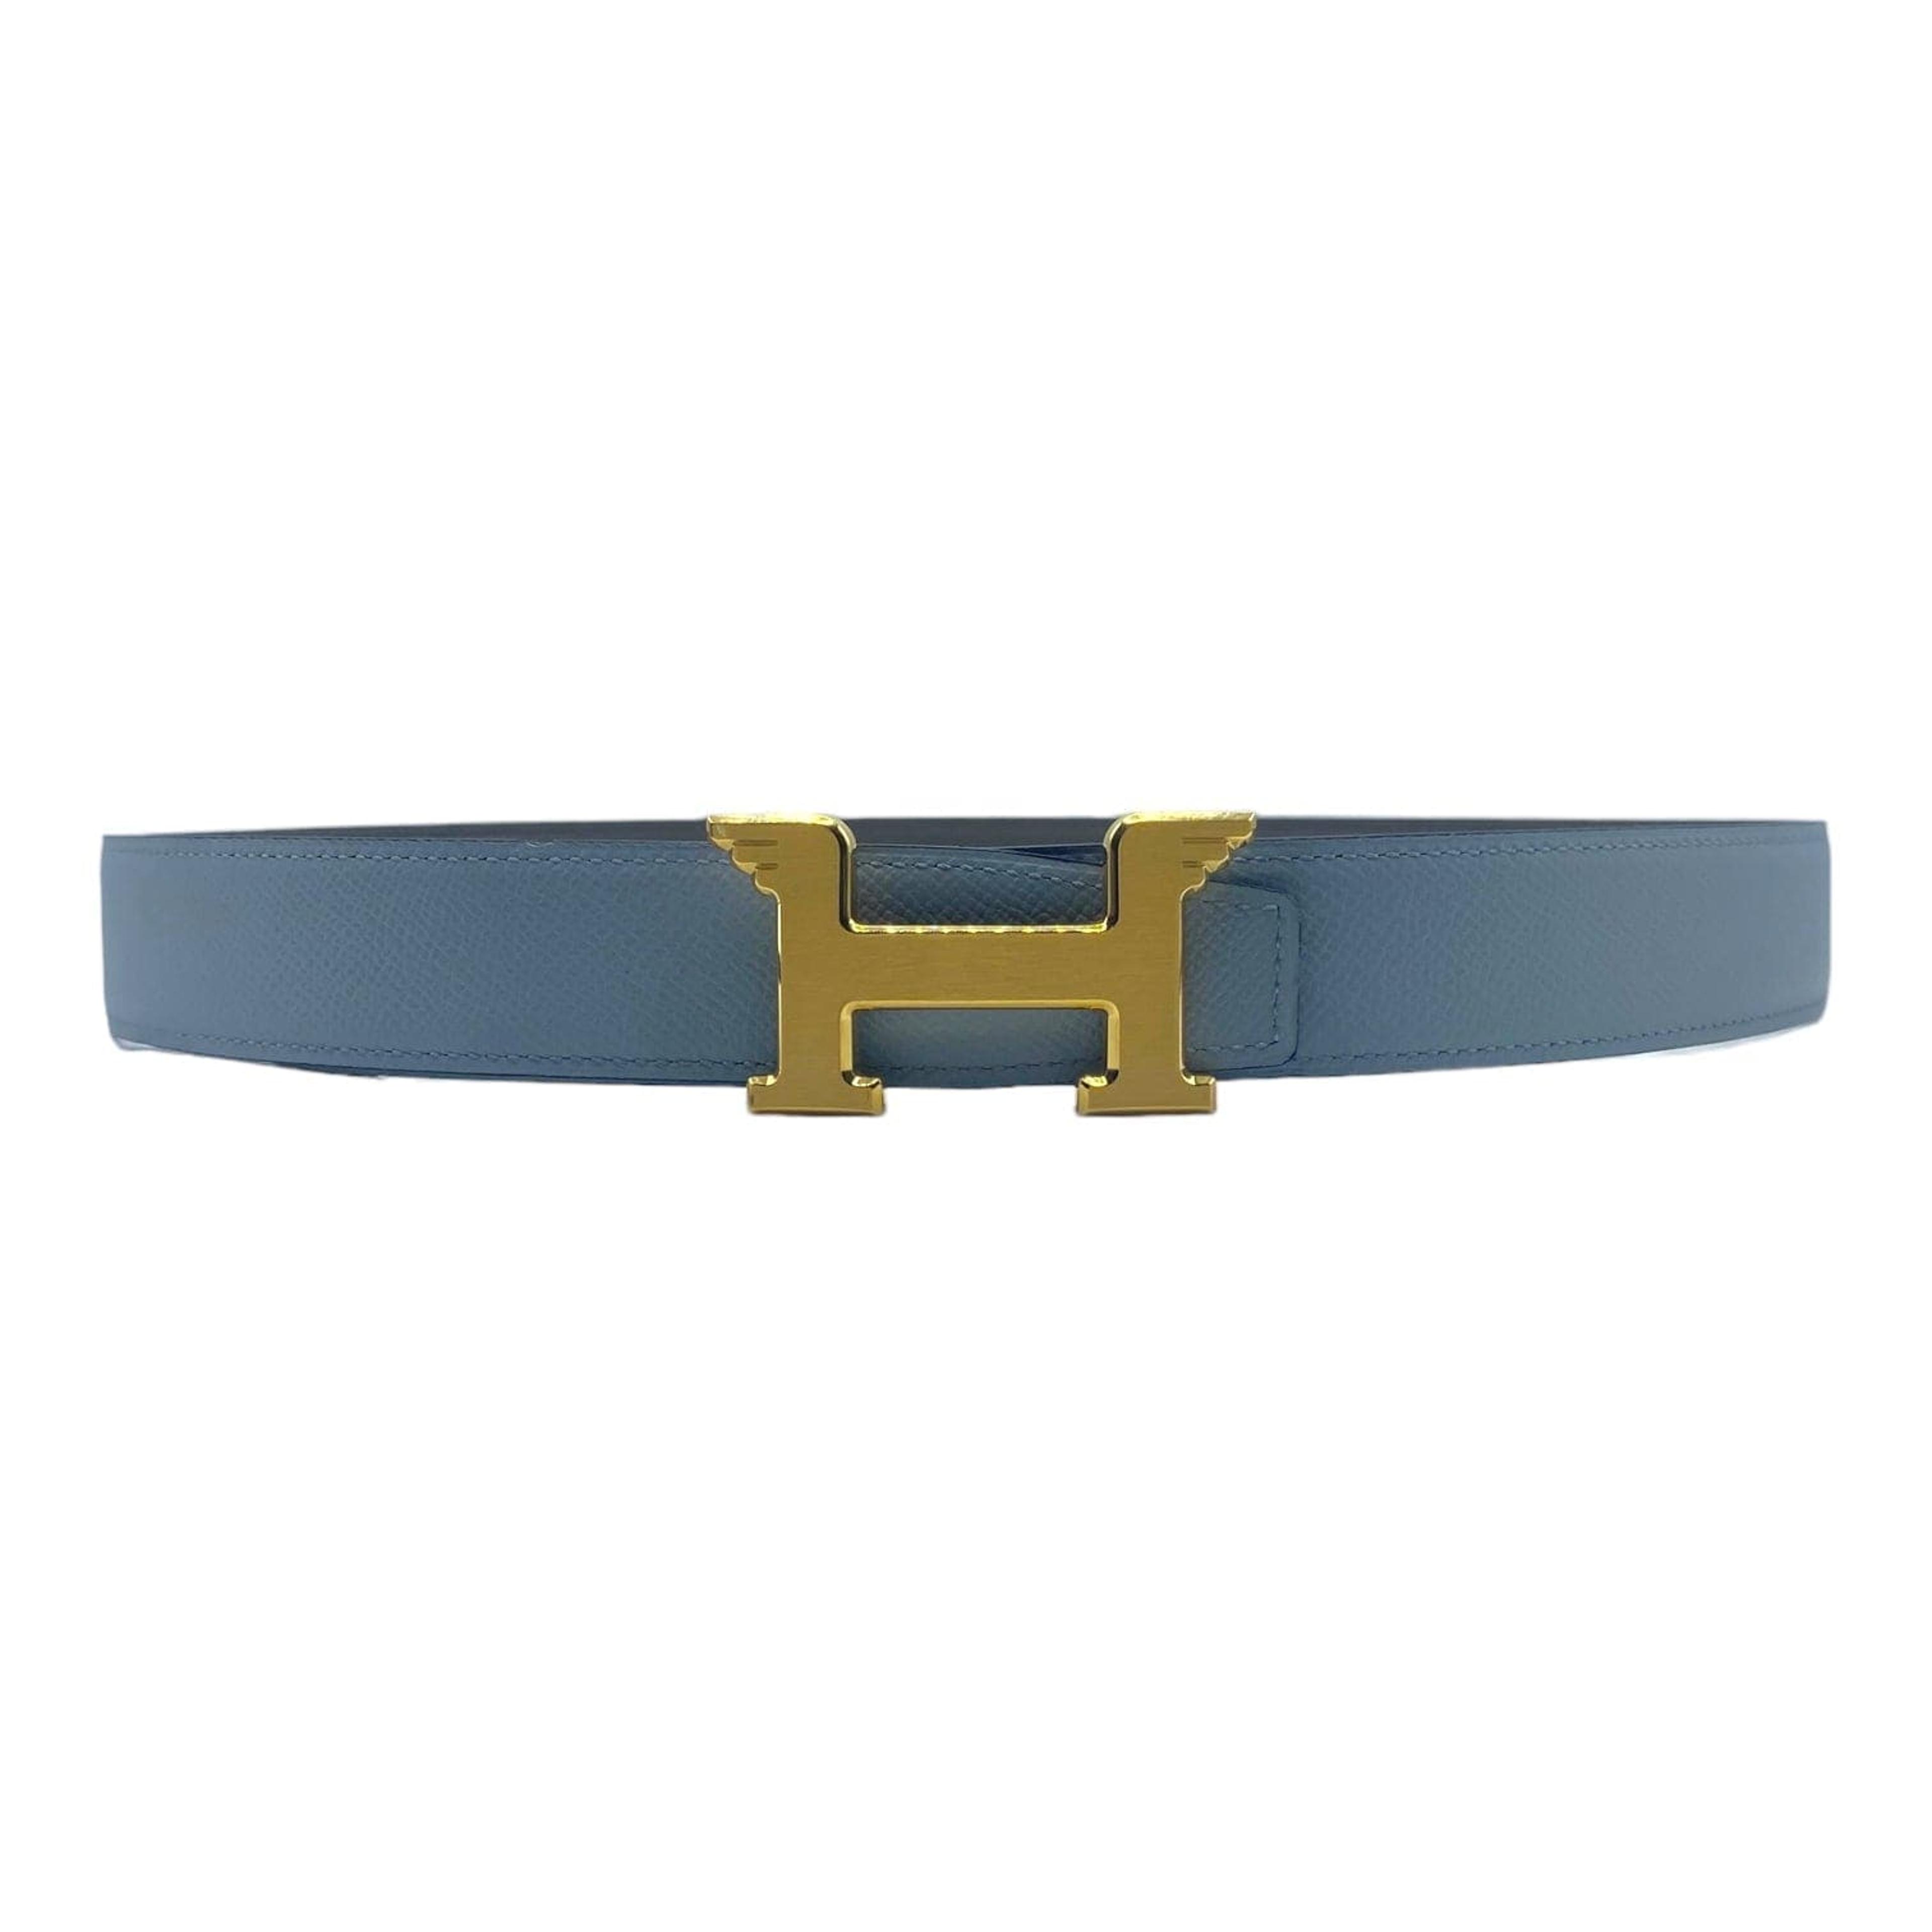 Alternate View 4 of Hermes Reversible Leather Belt Blue/Brown